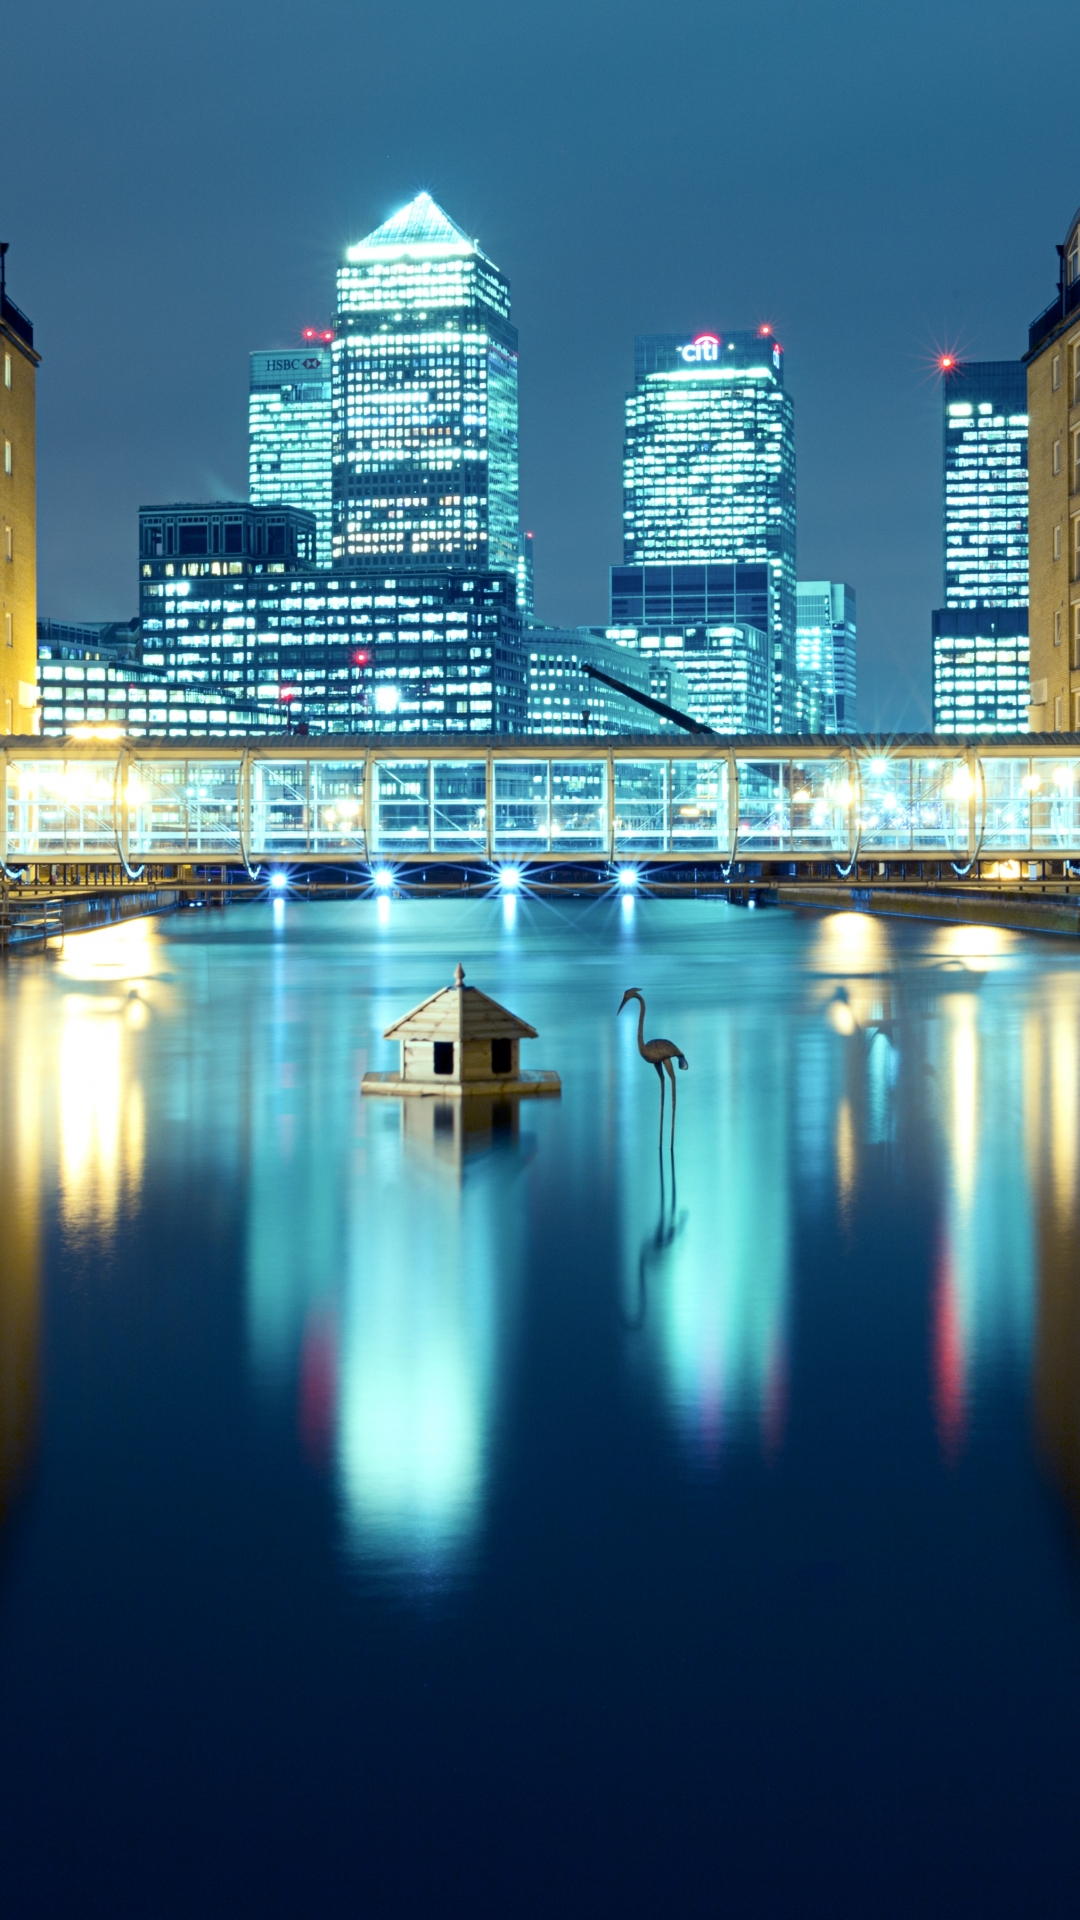 man made, london, wharf, reflection, england, light, building, night, cities phone background